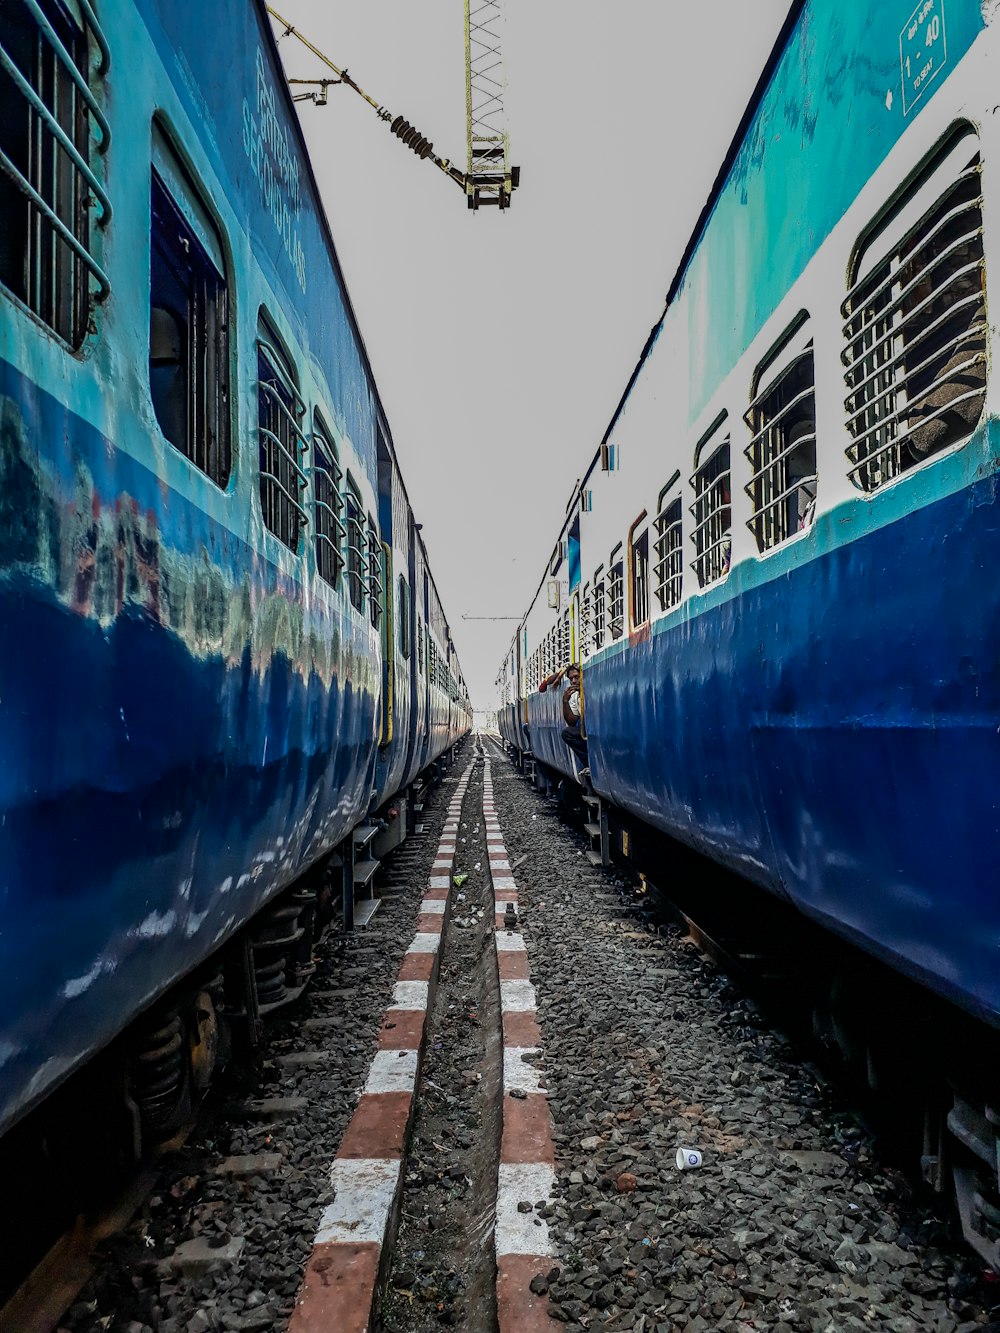 Treno blu e bianco sui binari ferroviari